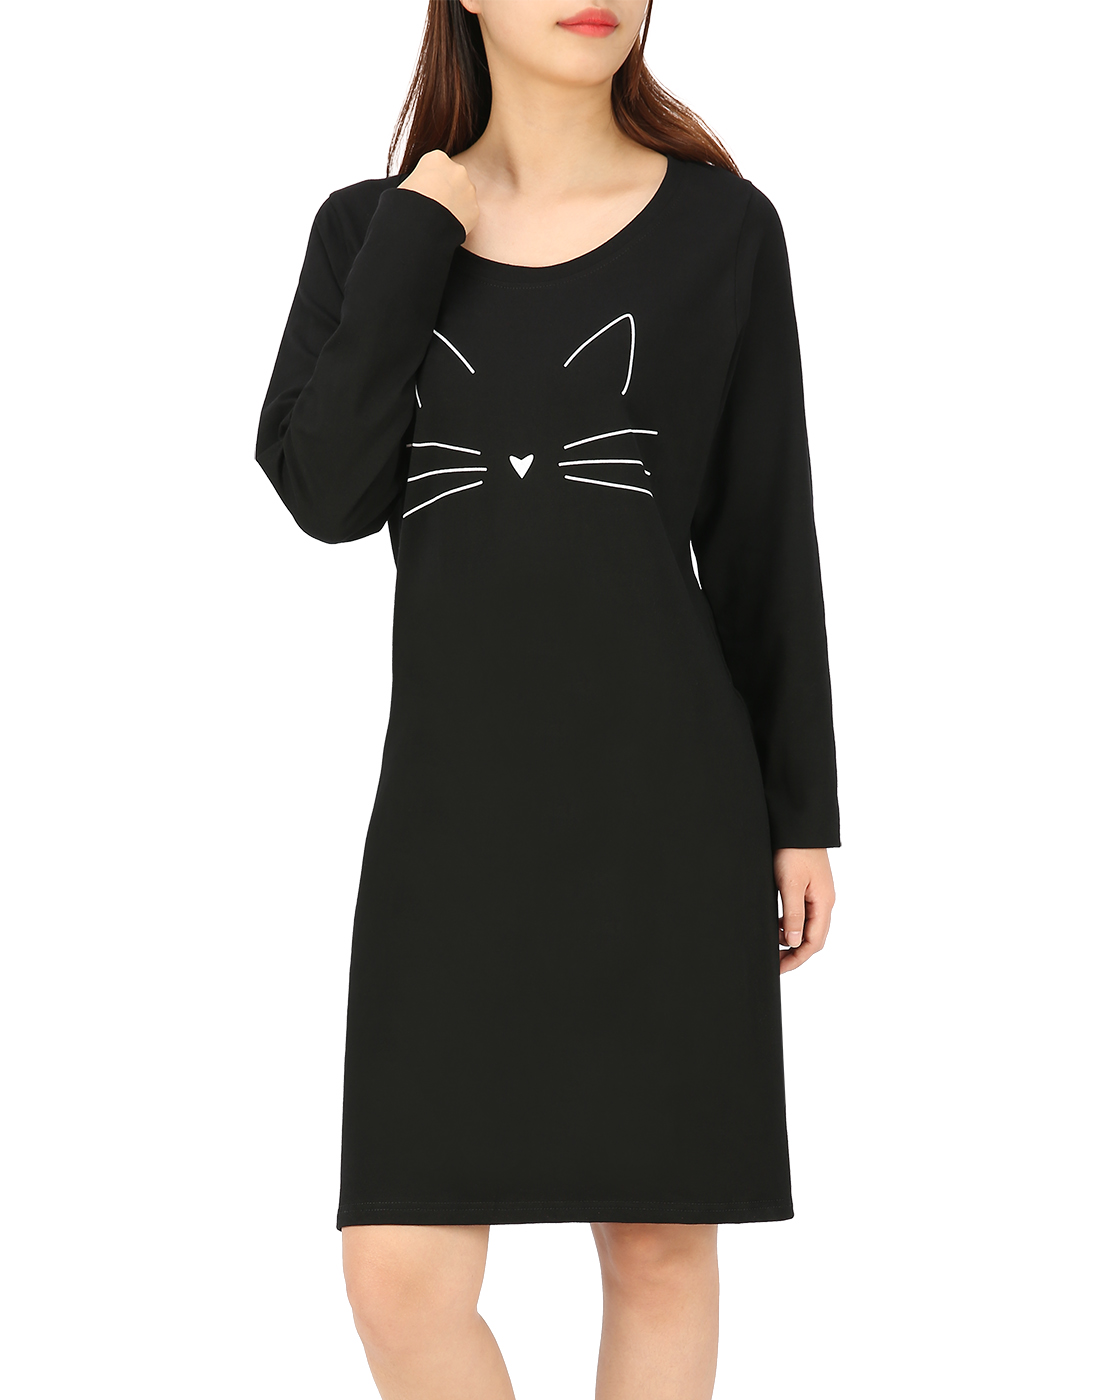 DreamFish Nightgowns for Women V Neck Short Sleeve Knee Length Sleep Dress,  Woman Sleepshirt/Nightshirts/Sleepwear